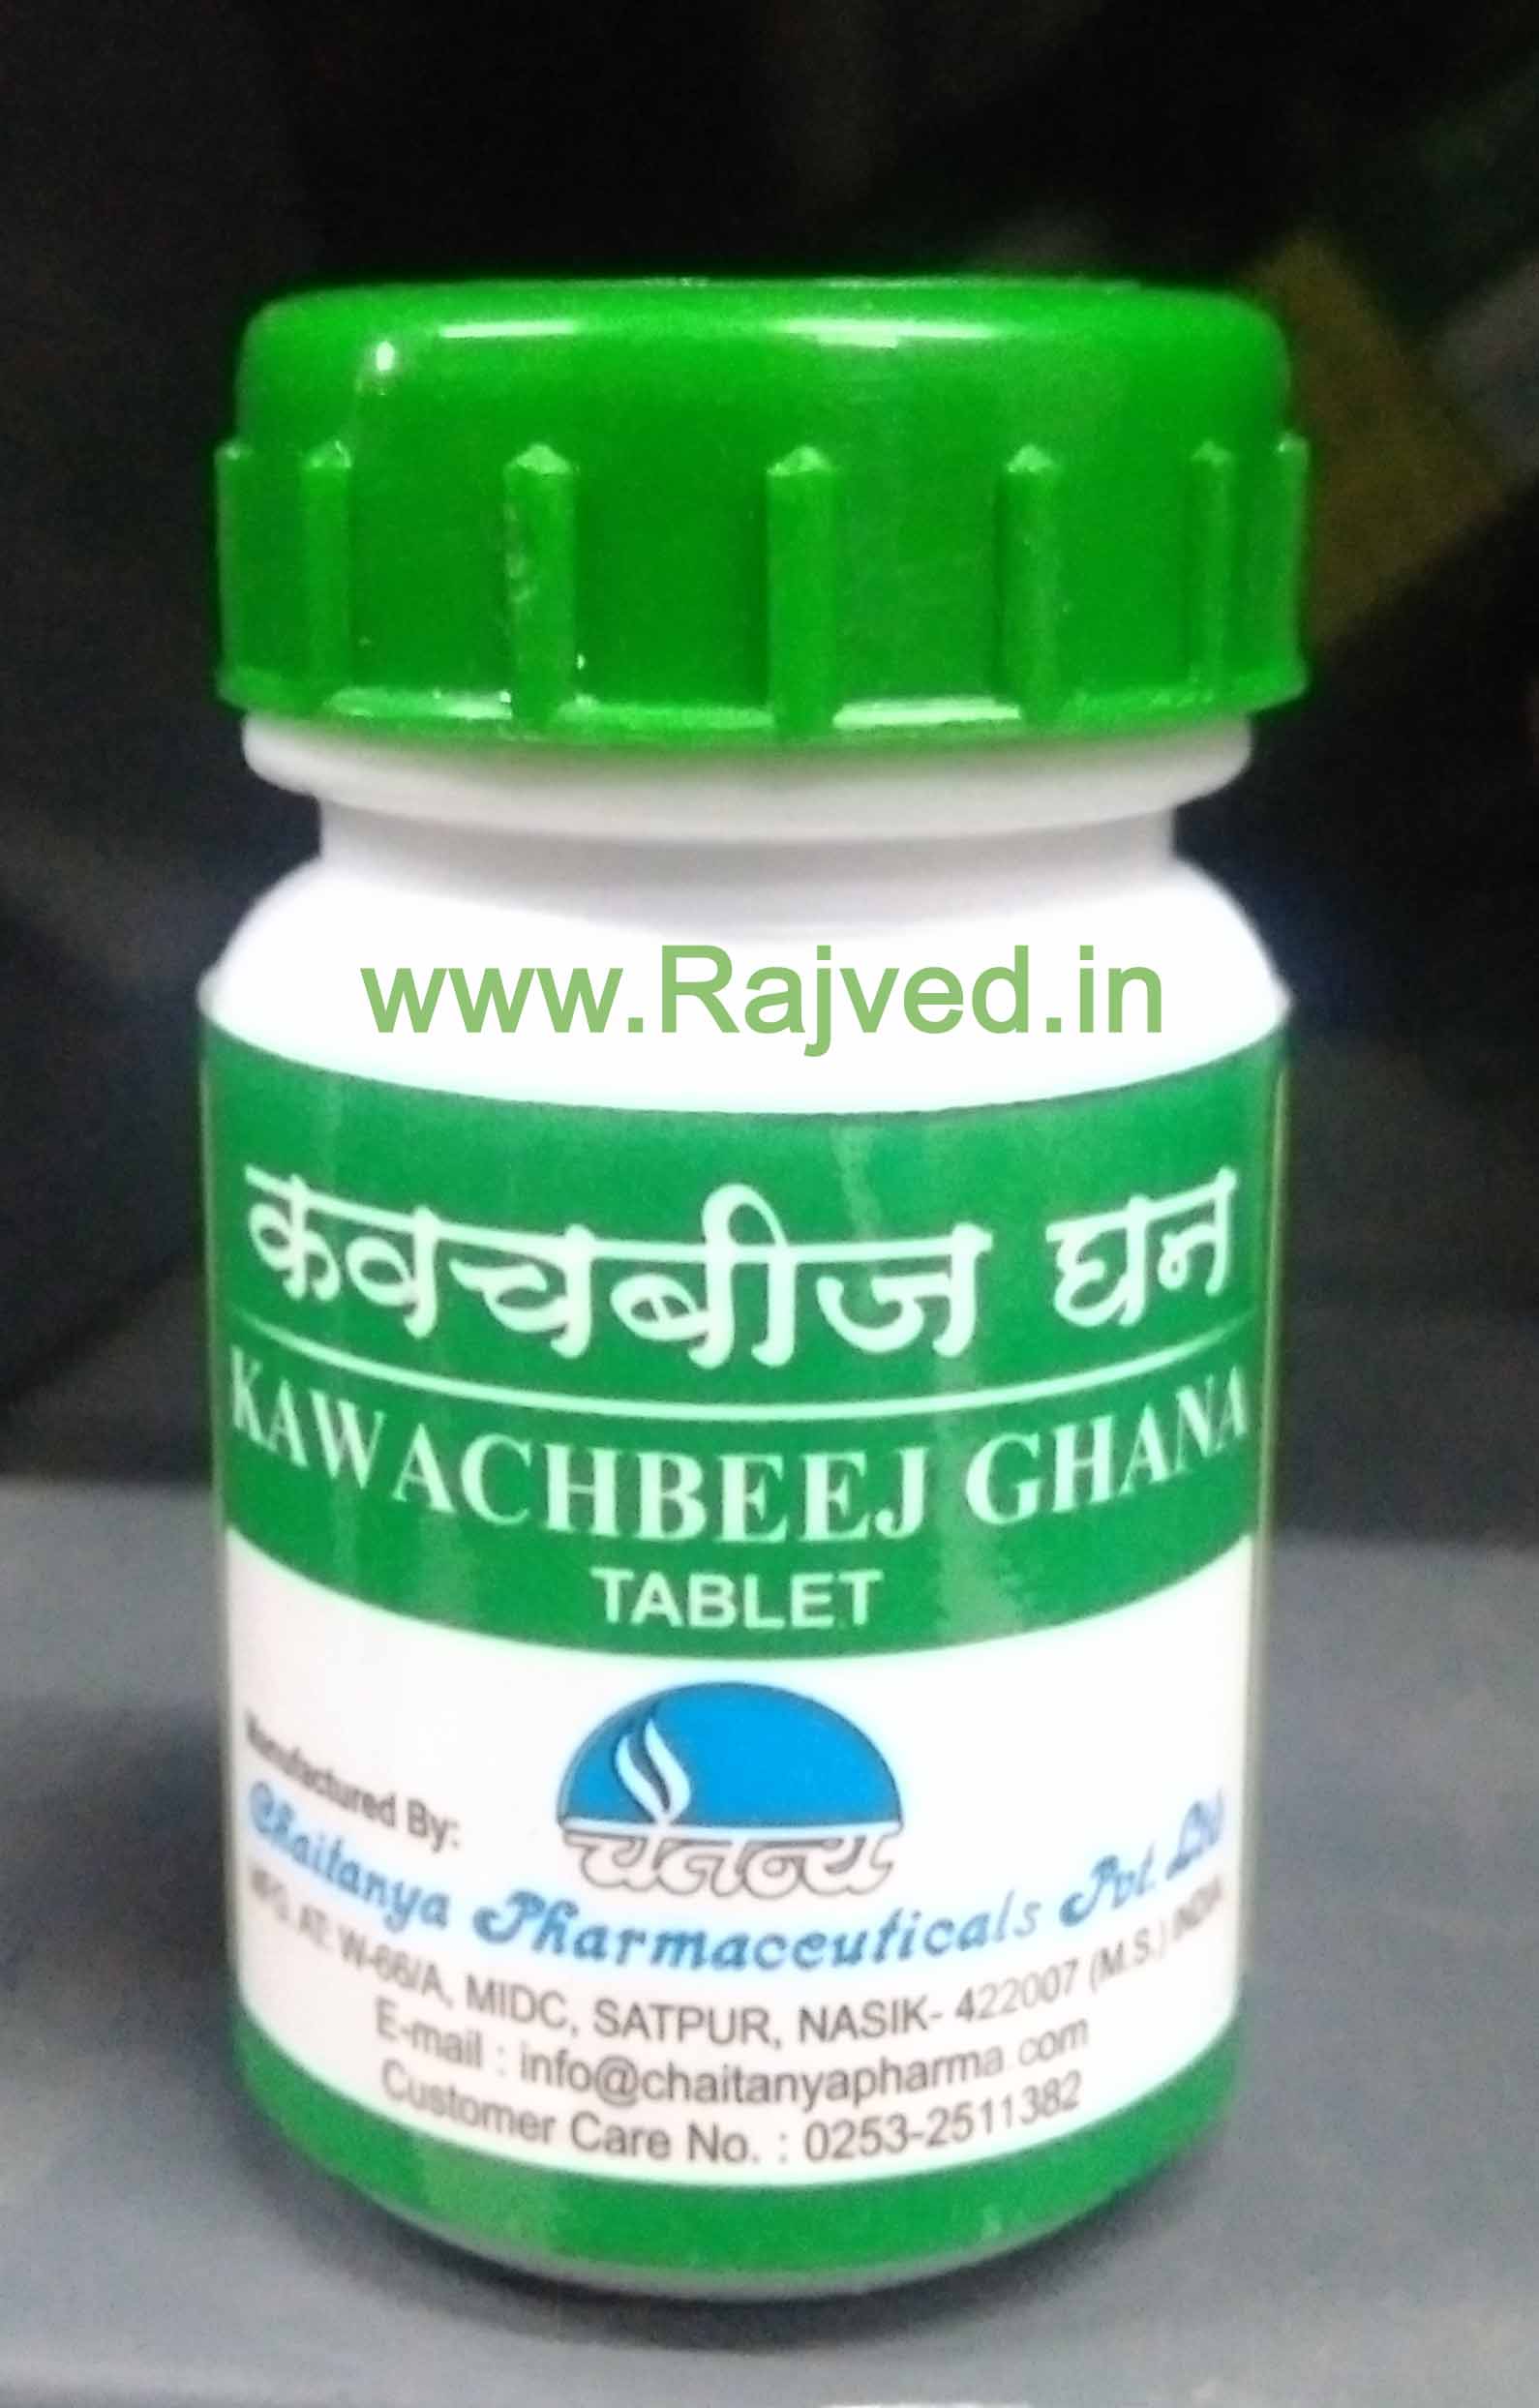 kawachbeej ghana 60tab upto 20% off chaitanya pharmaceuticals